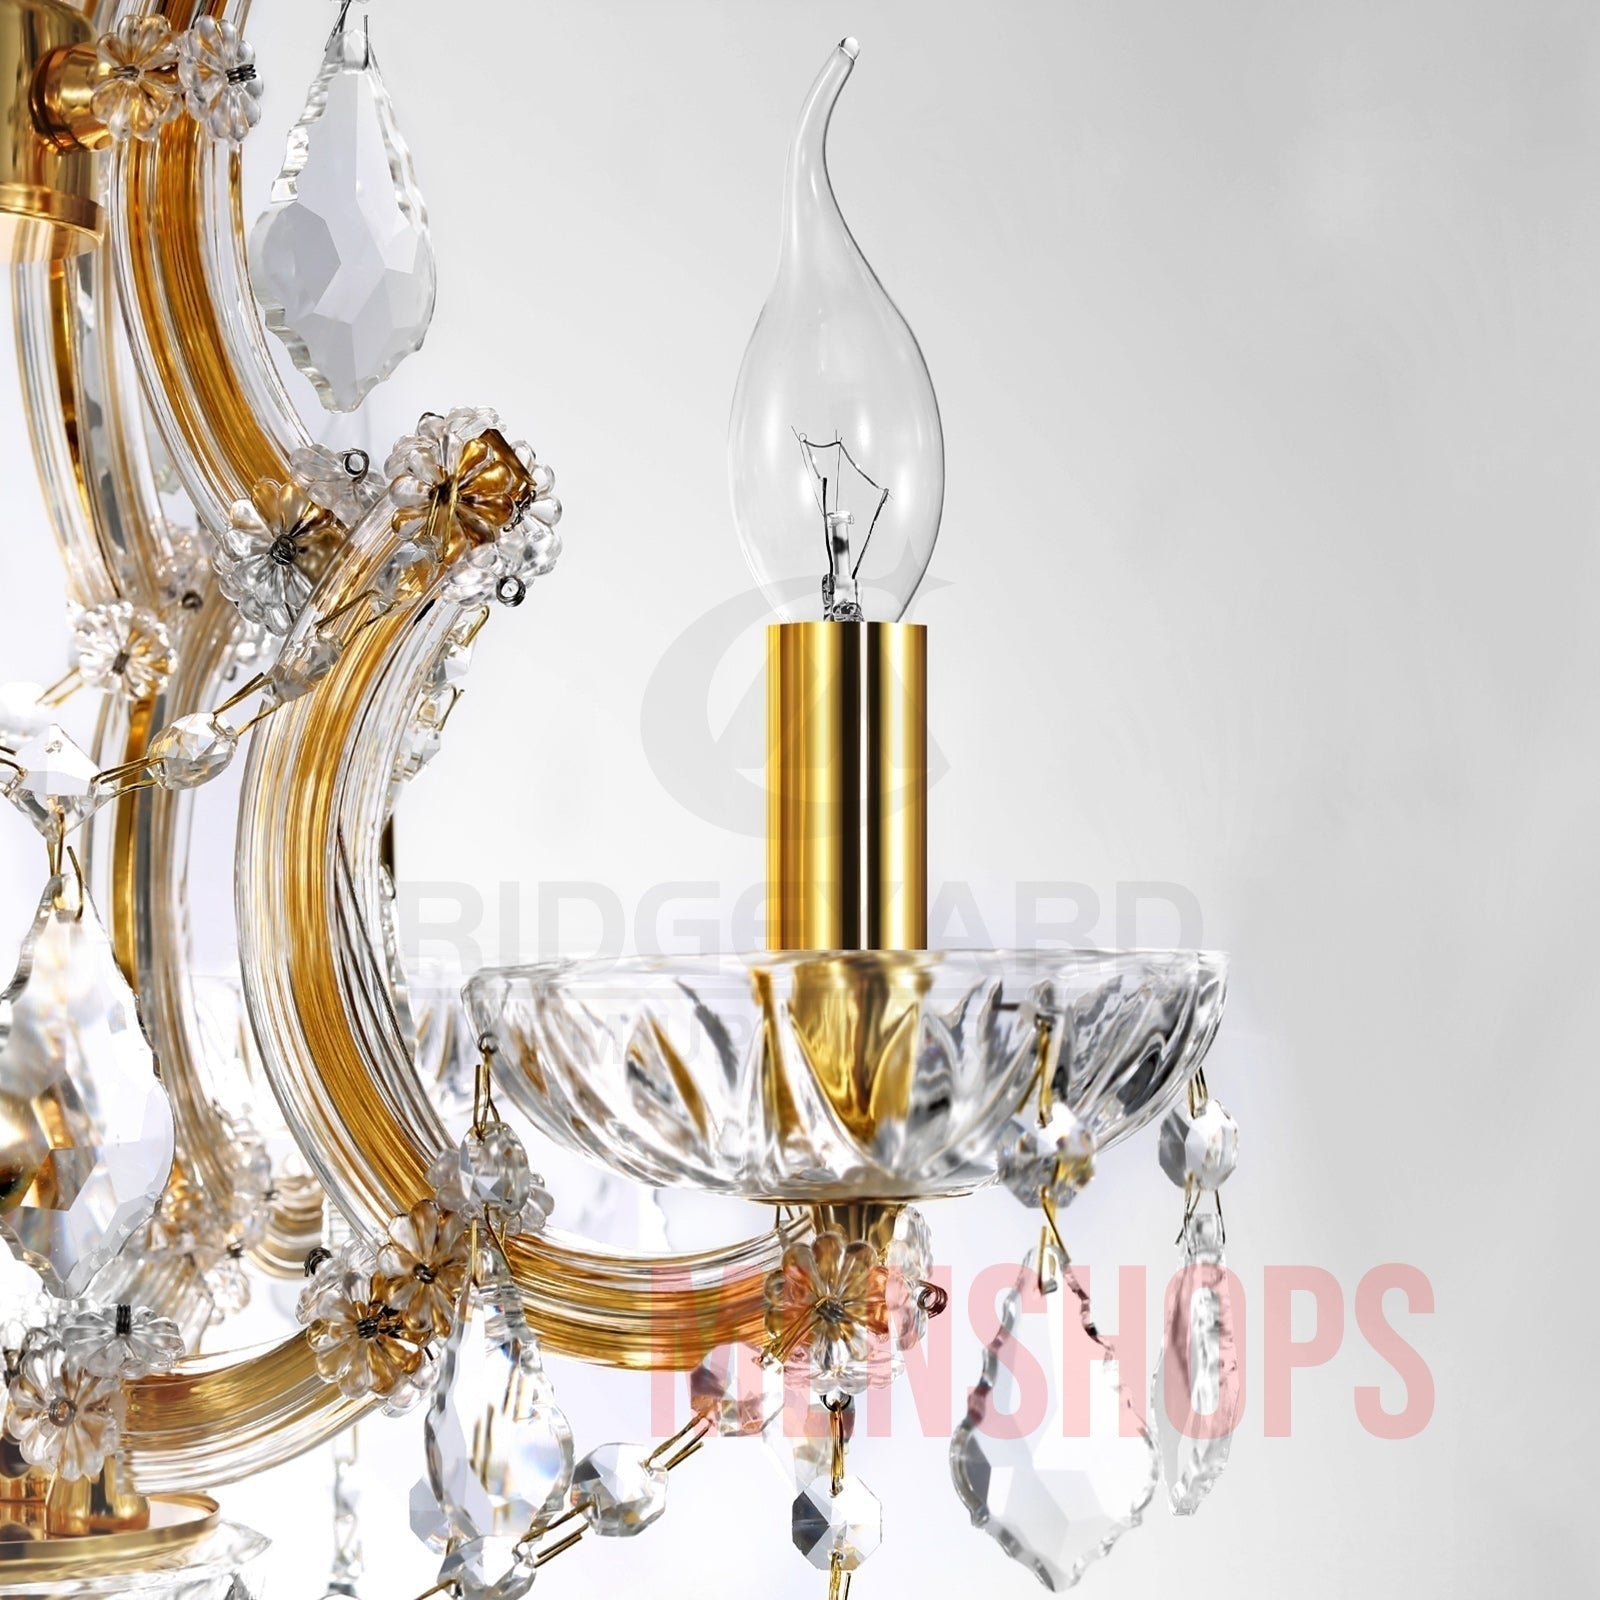 K9 Crystal Chandeliers Lighting 4 Lights Crystal Ceiling Lamp Home Decoration Gold